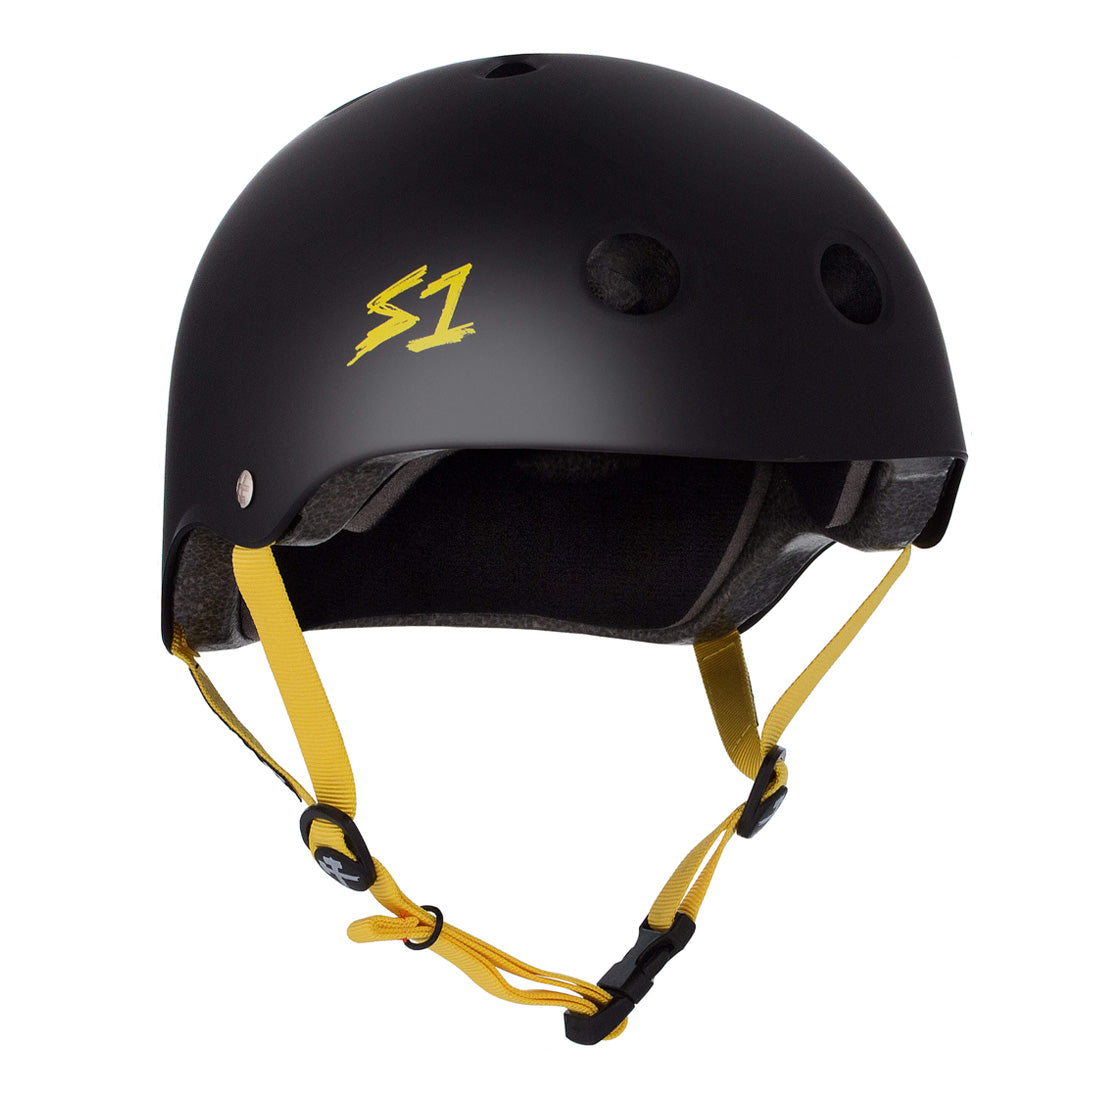 S-One Lifer Helmet - Black/Yellow Matte Helmets